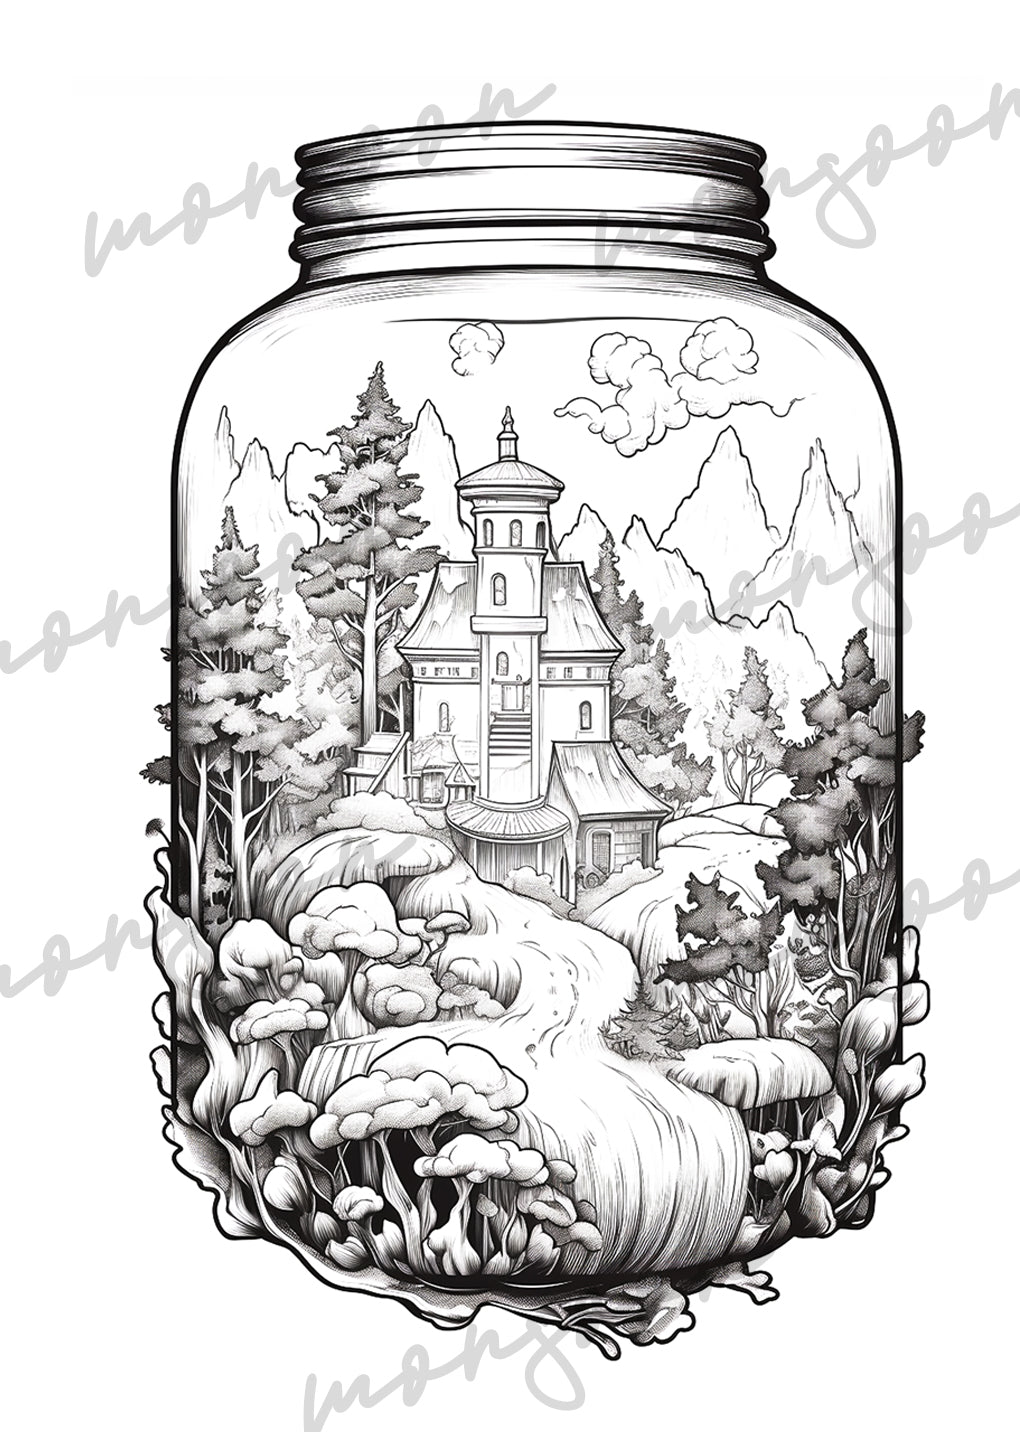 Jars in Wonderland Coloring Book Grayscale (Digital) - Monsoon Publishing USA